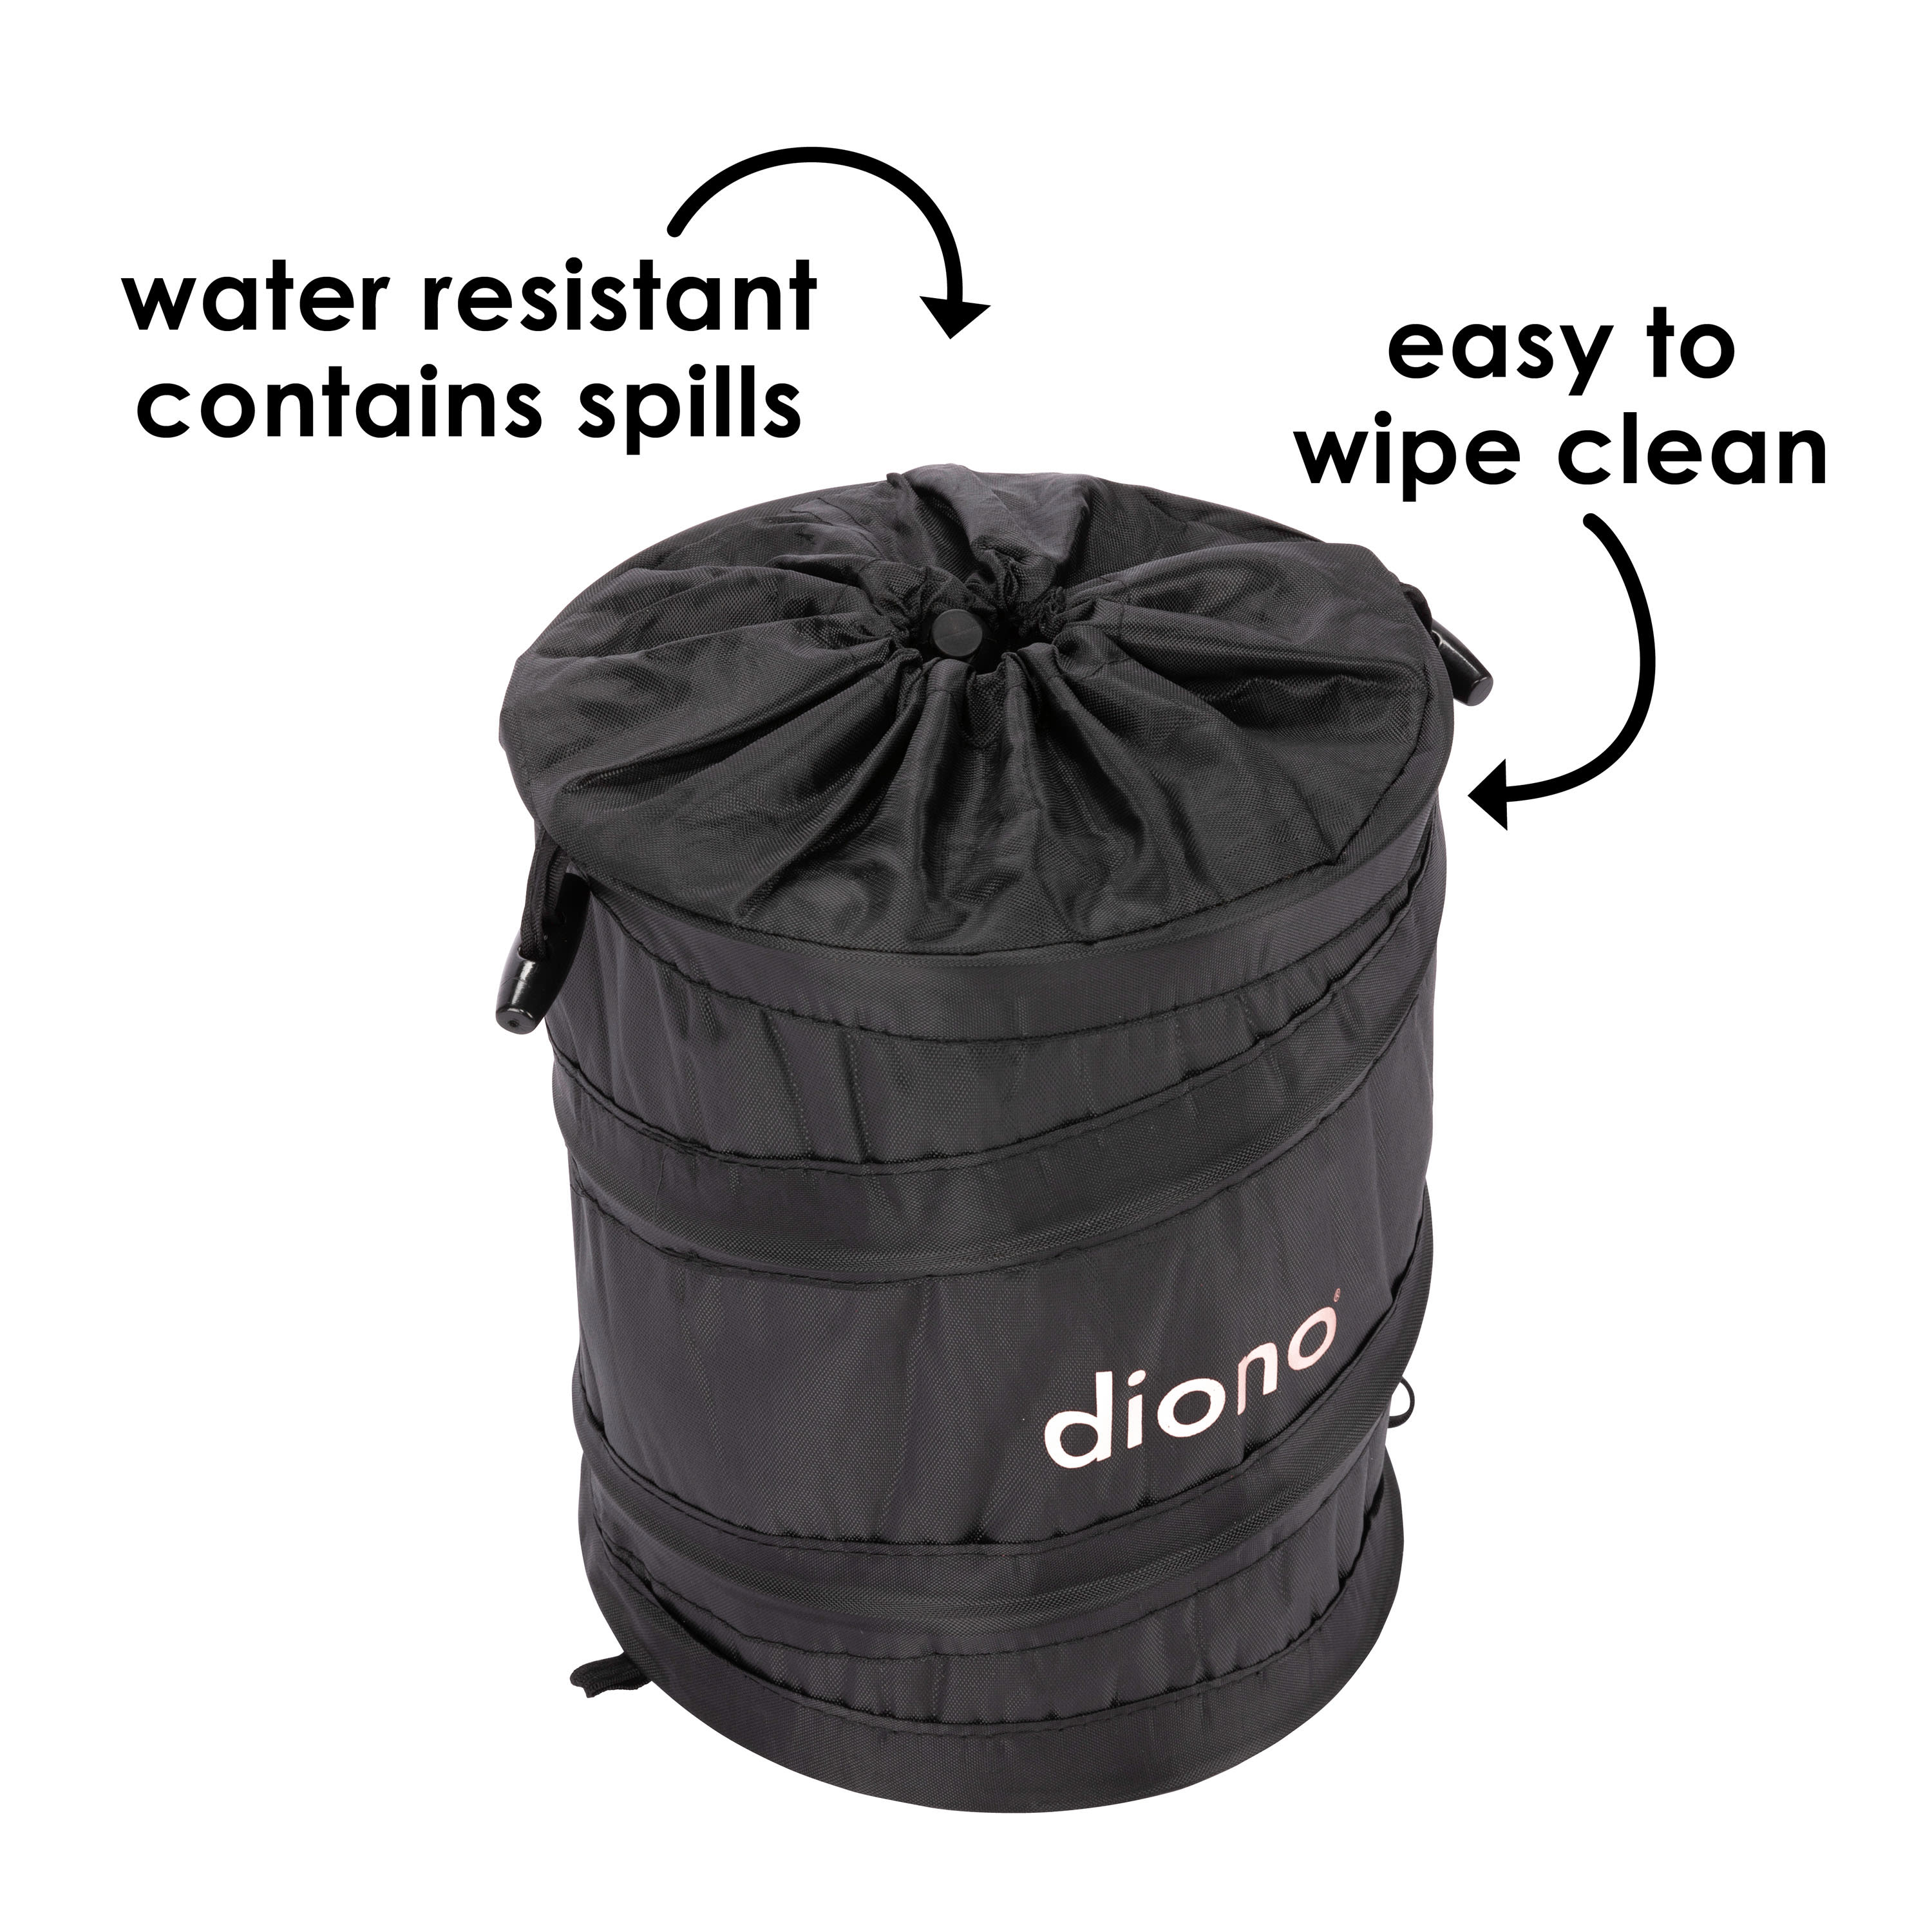 Diono Pop Up Portable Car Trash Bin Basket, Leak Proof and Water Resistant, Black - image 5 of 13